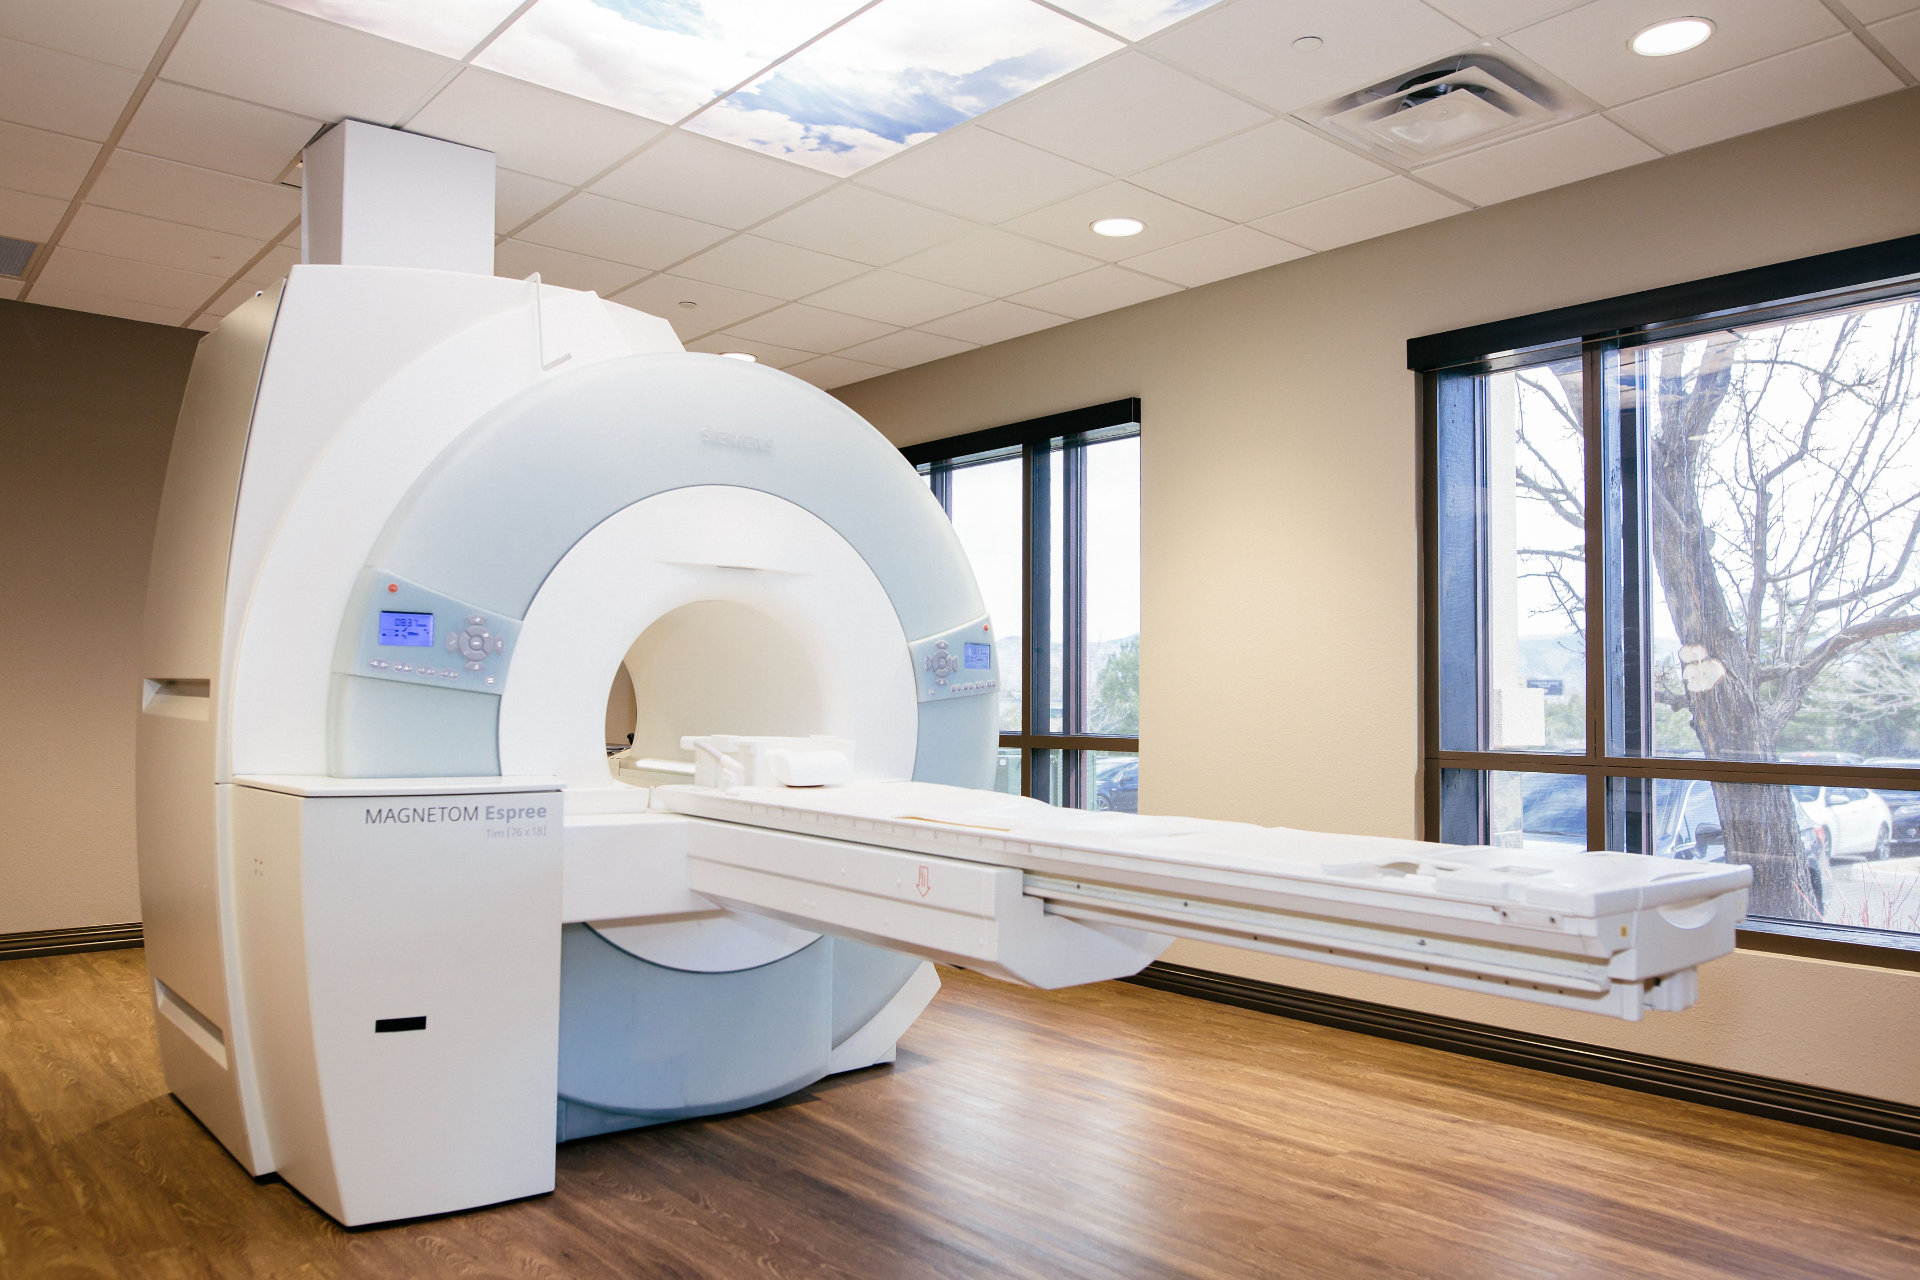 Magnetom Espree MRI machine at Sierra Neurosurgery Imaging Center Reno NV